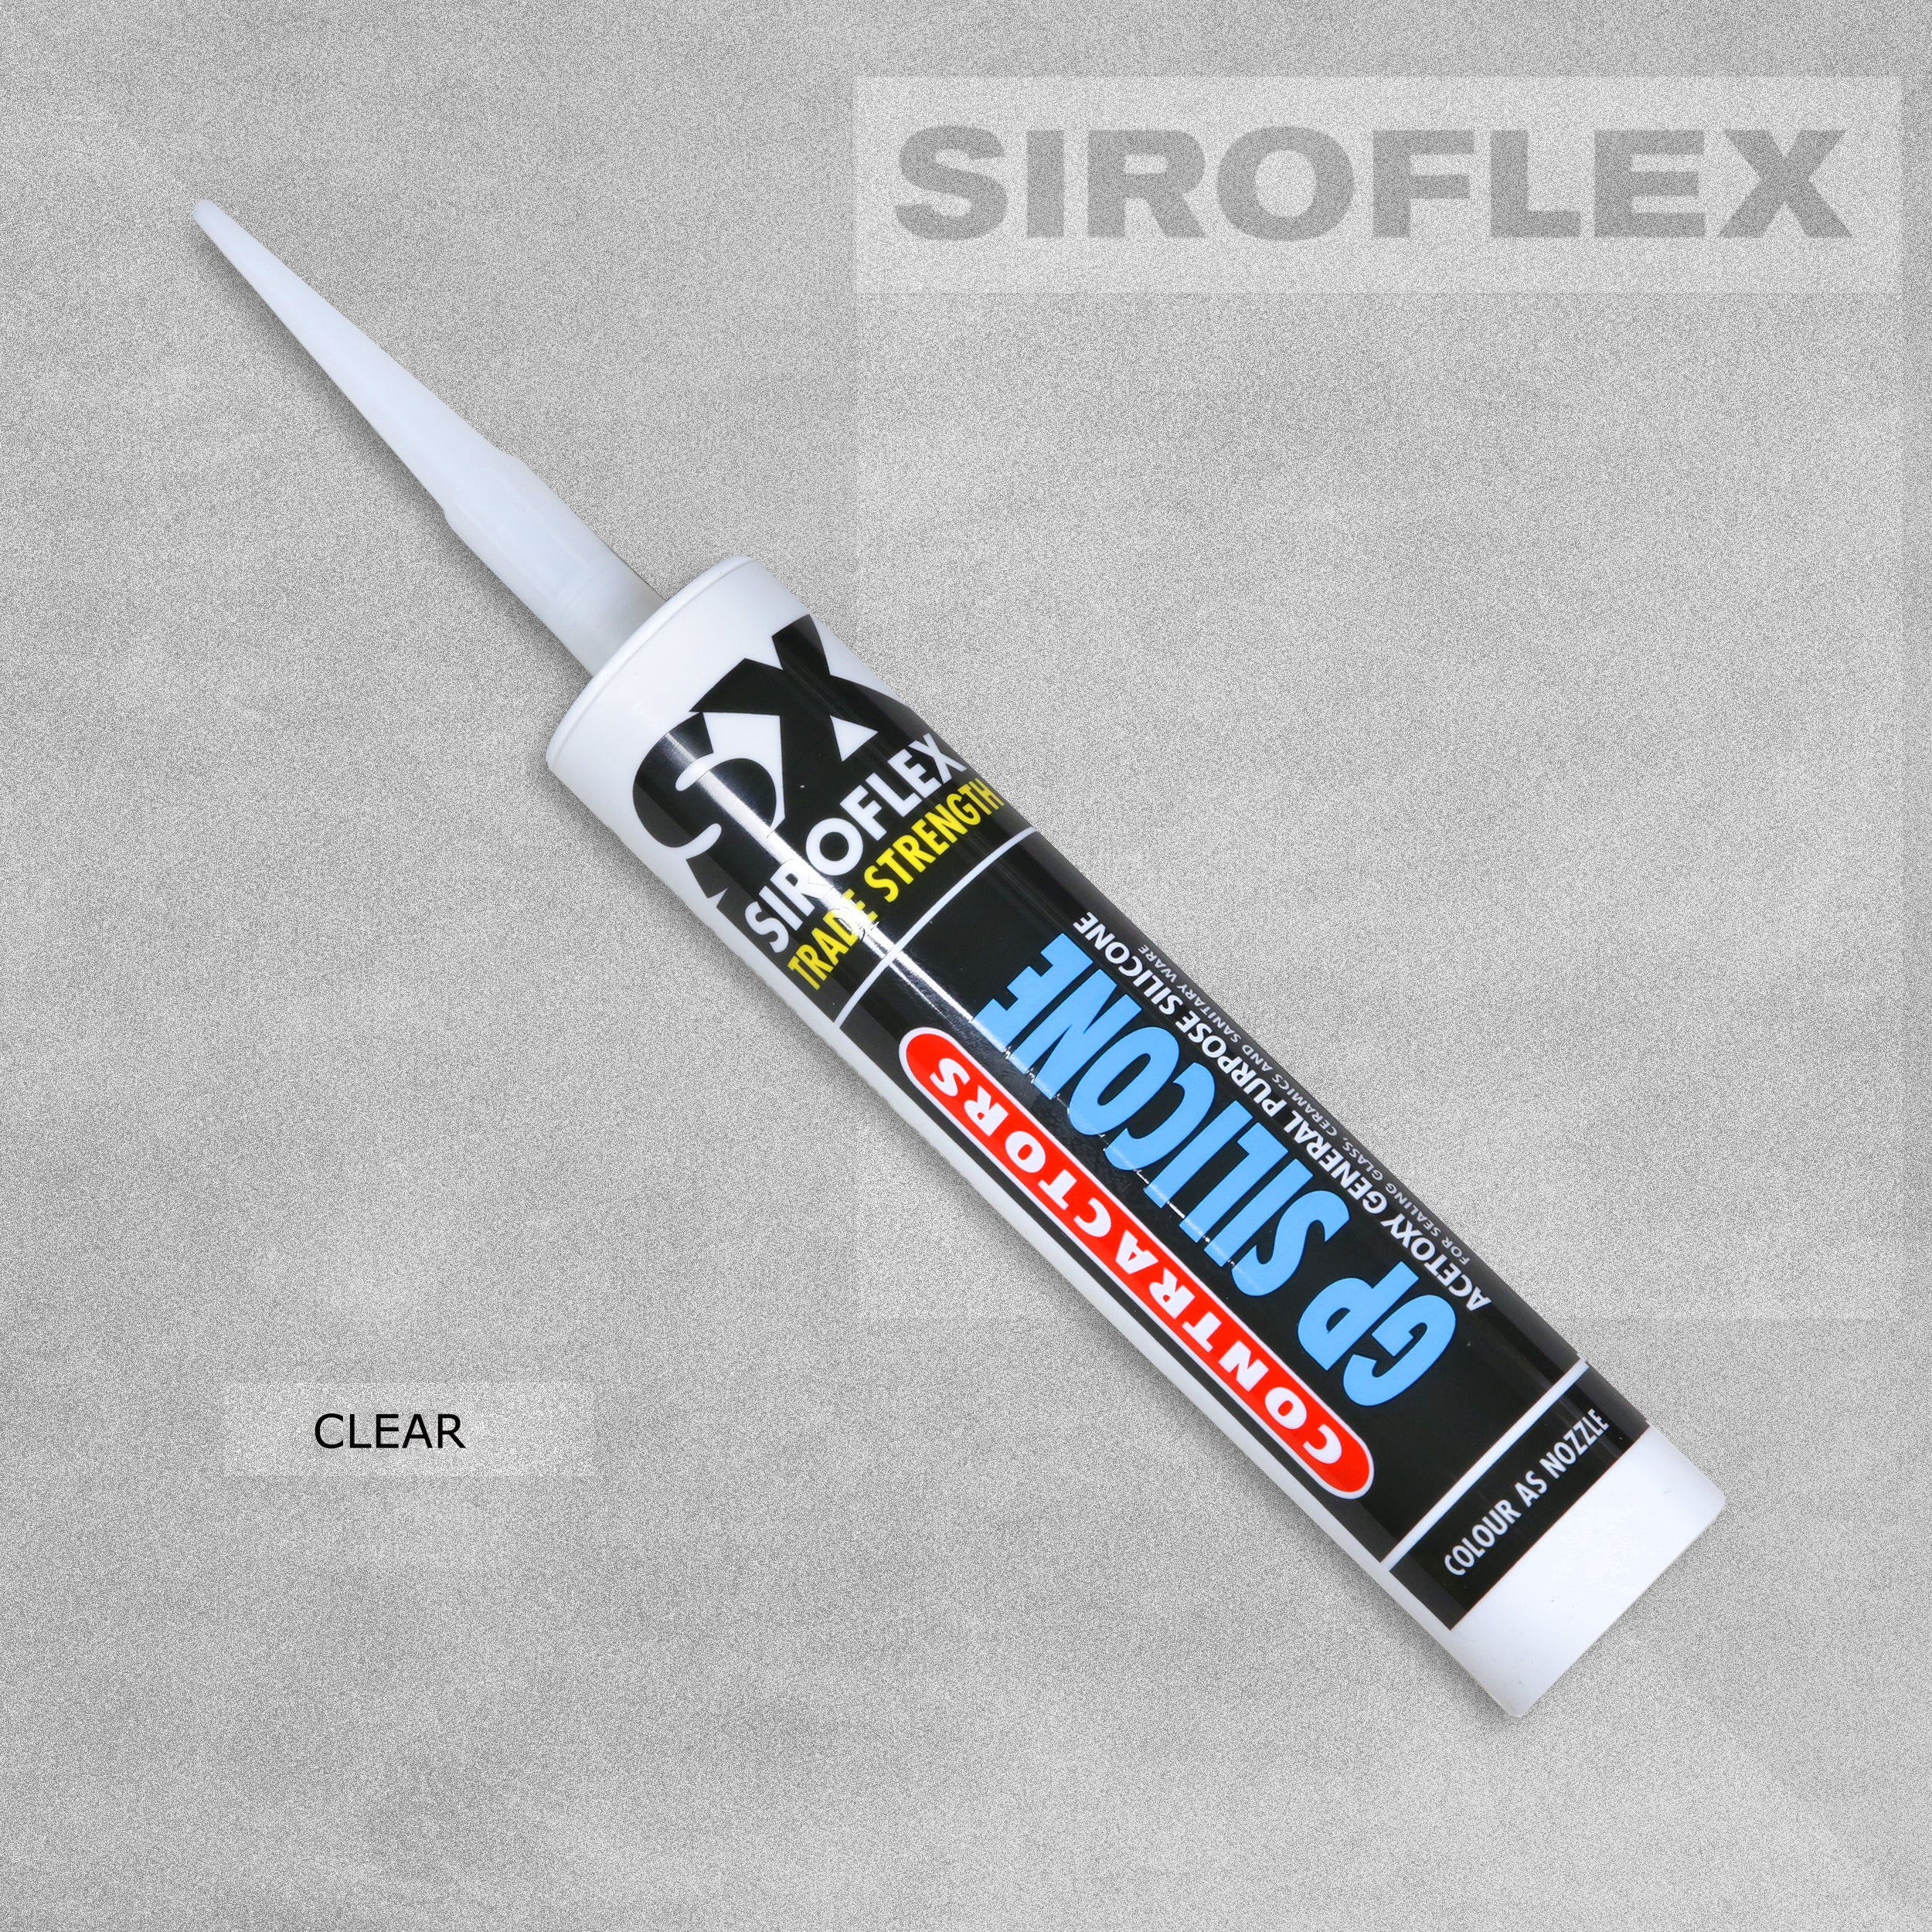 Siroflex Contractors General Purpose Silicone Clear - 300ml